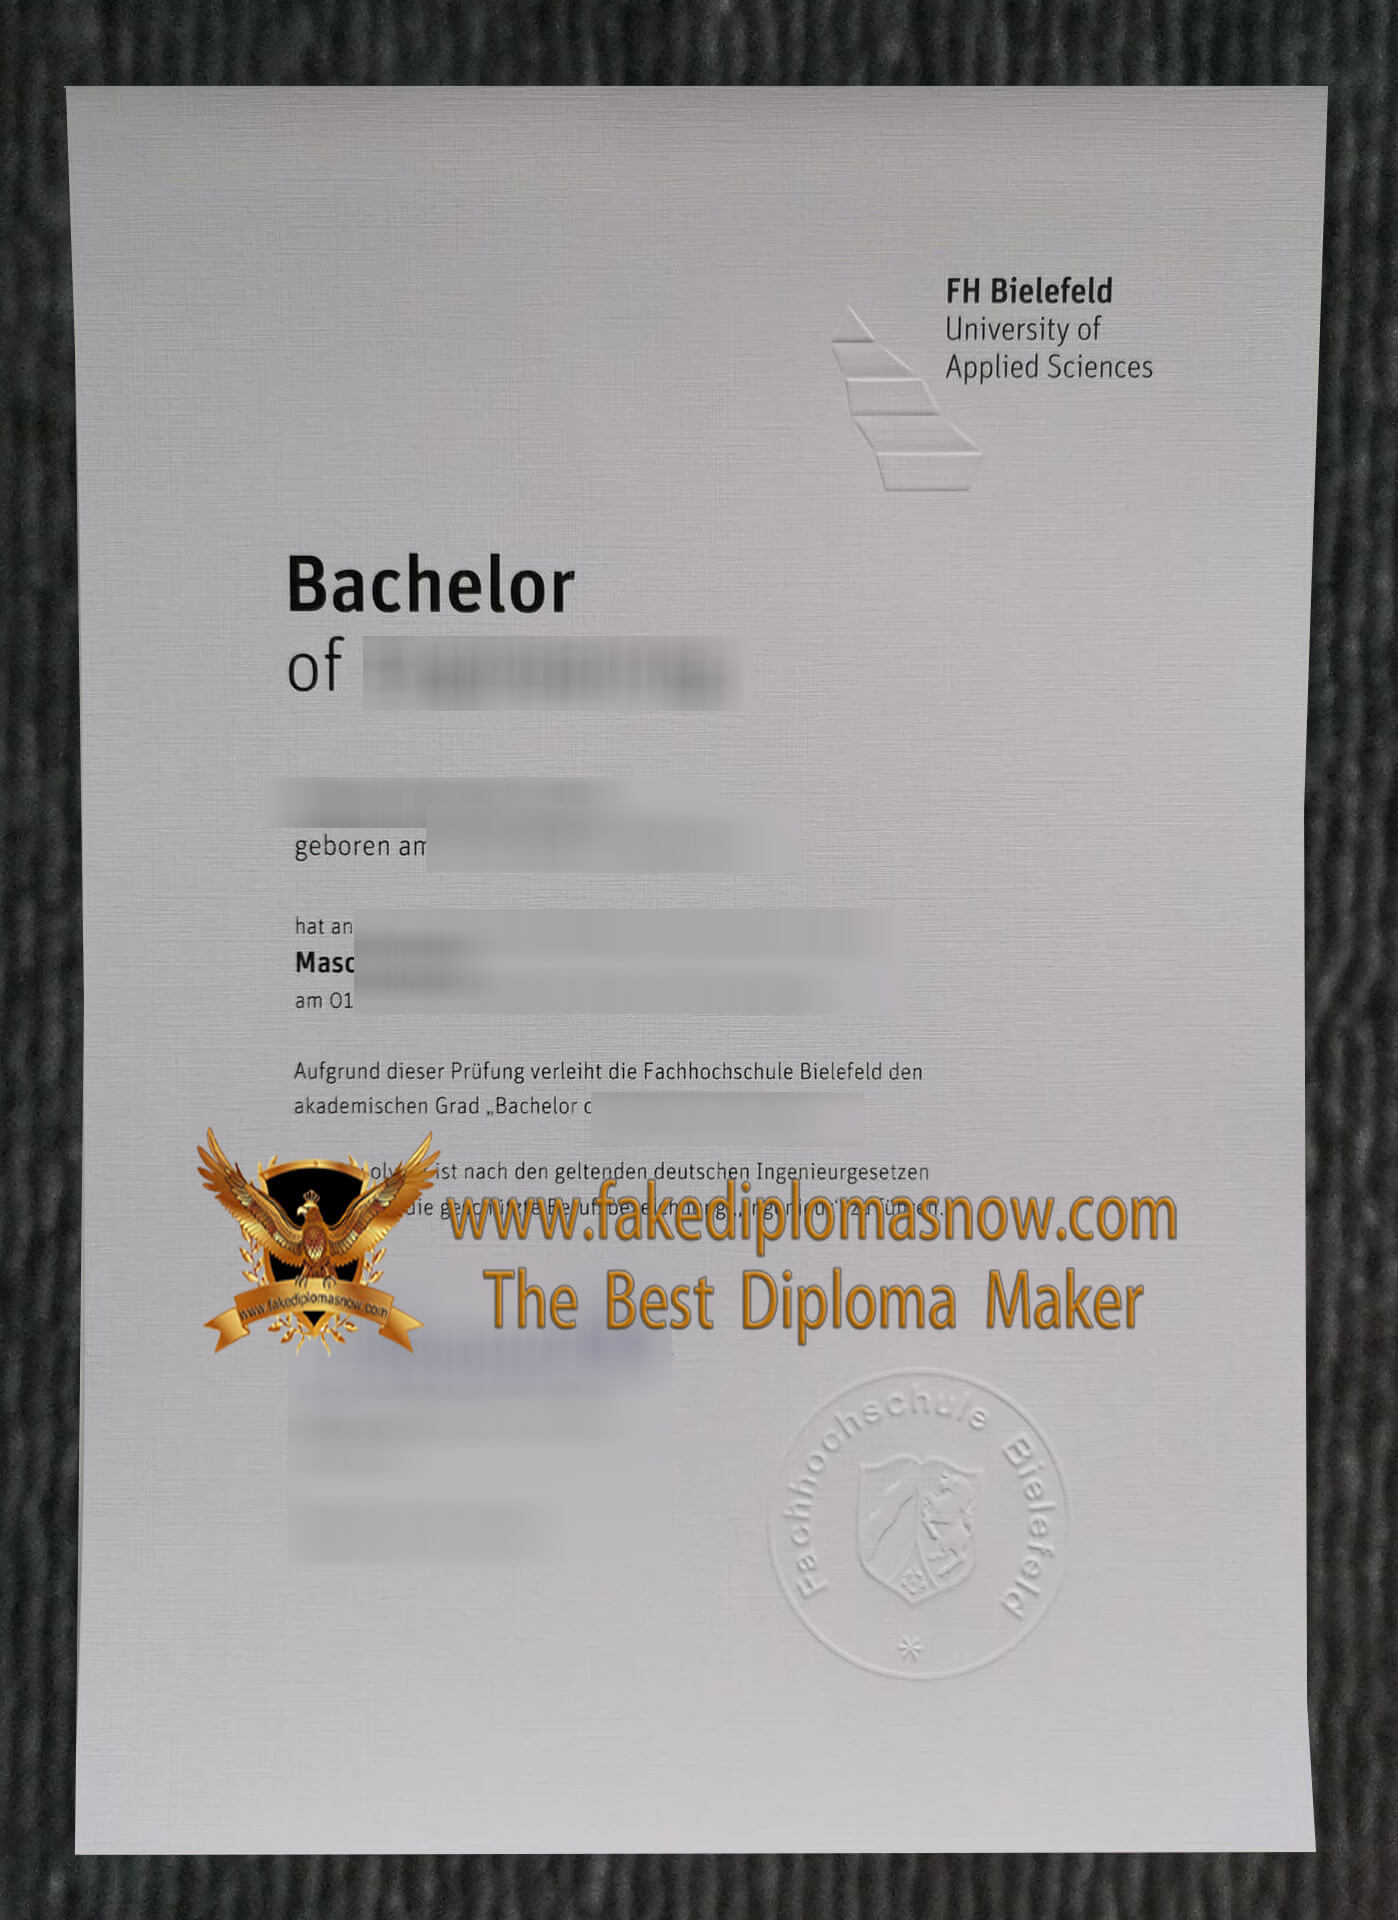 FH Bielefeld diploma